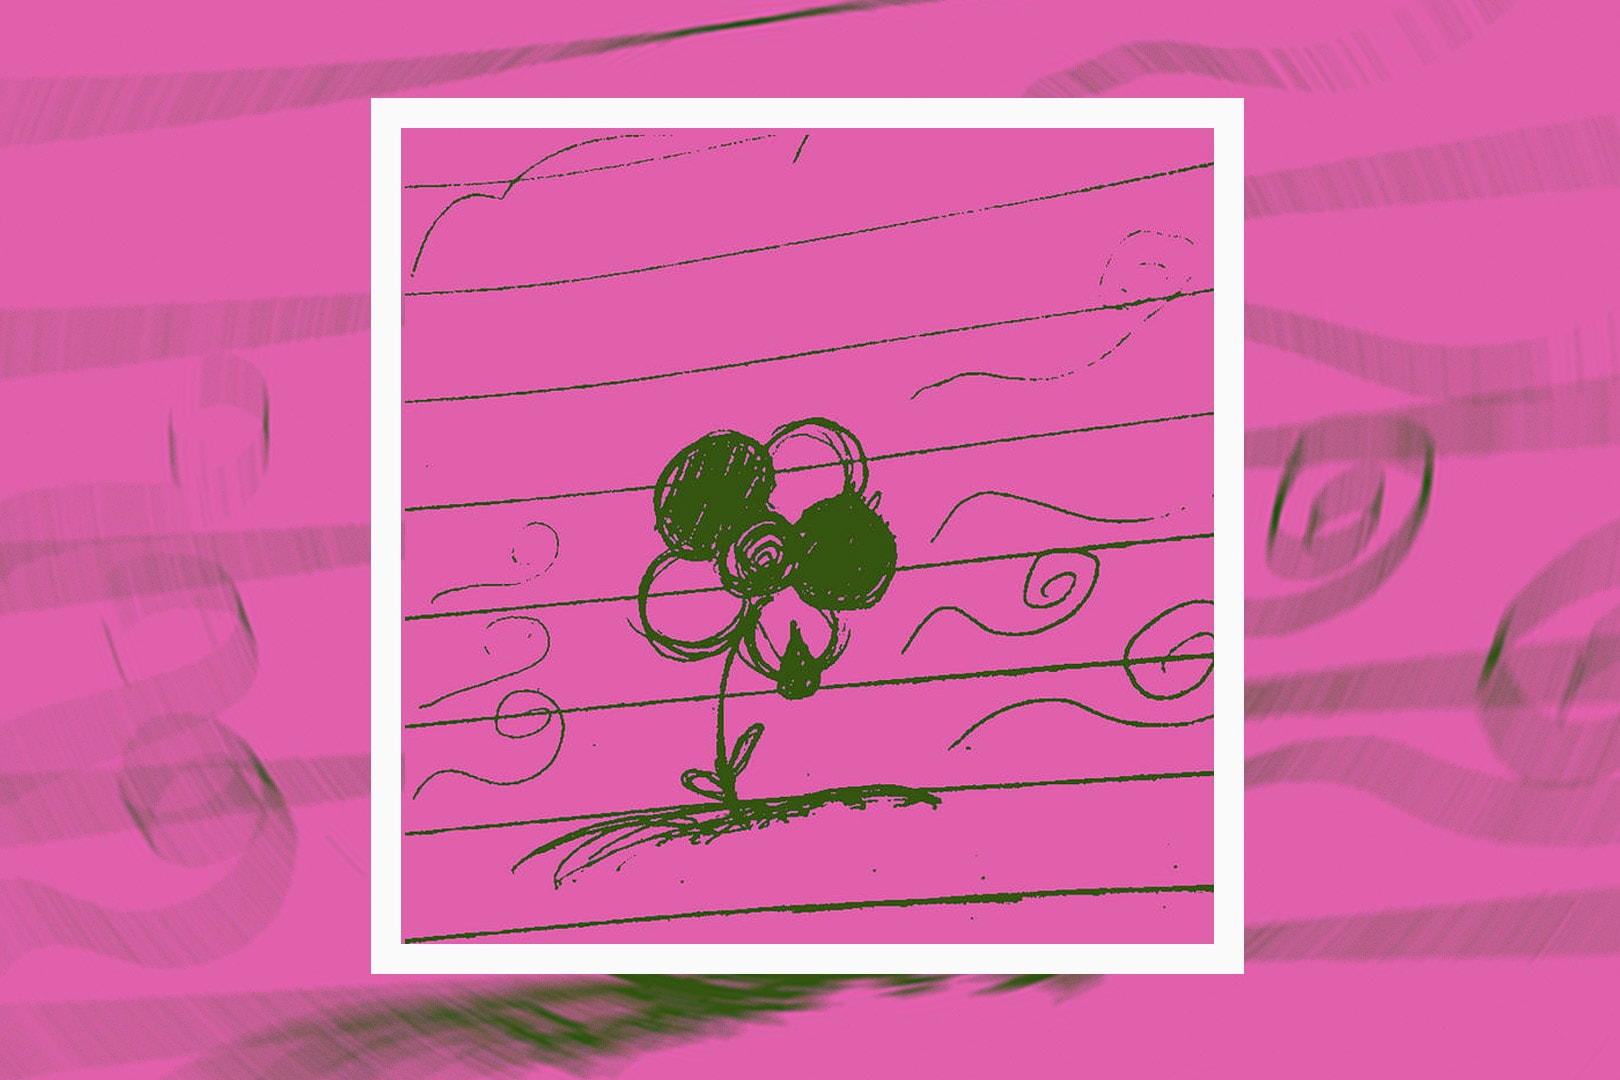 Akai Solo "Eleventh Wind" Album Release pink flower wind cover